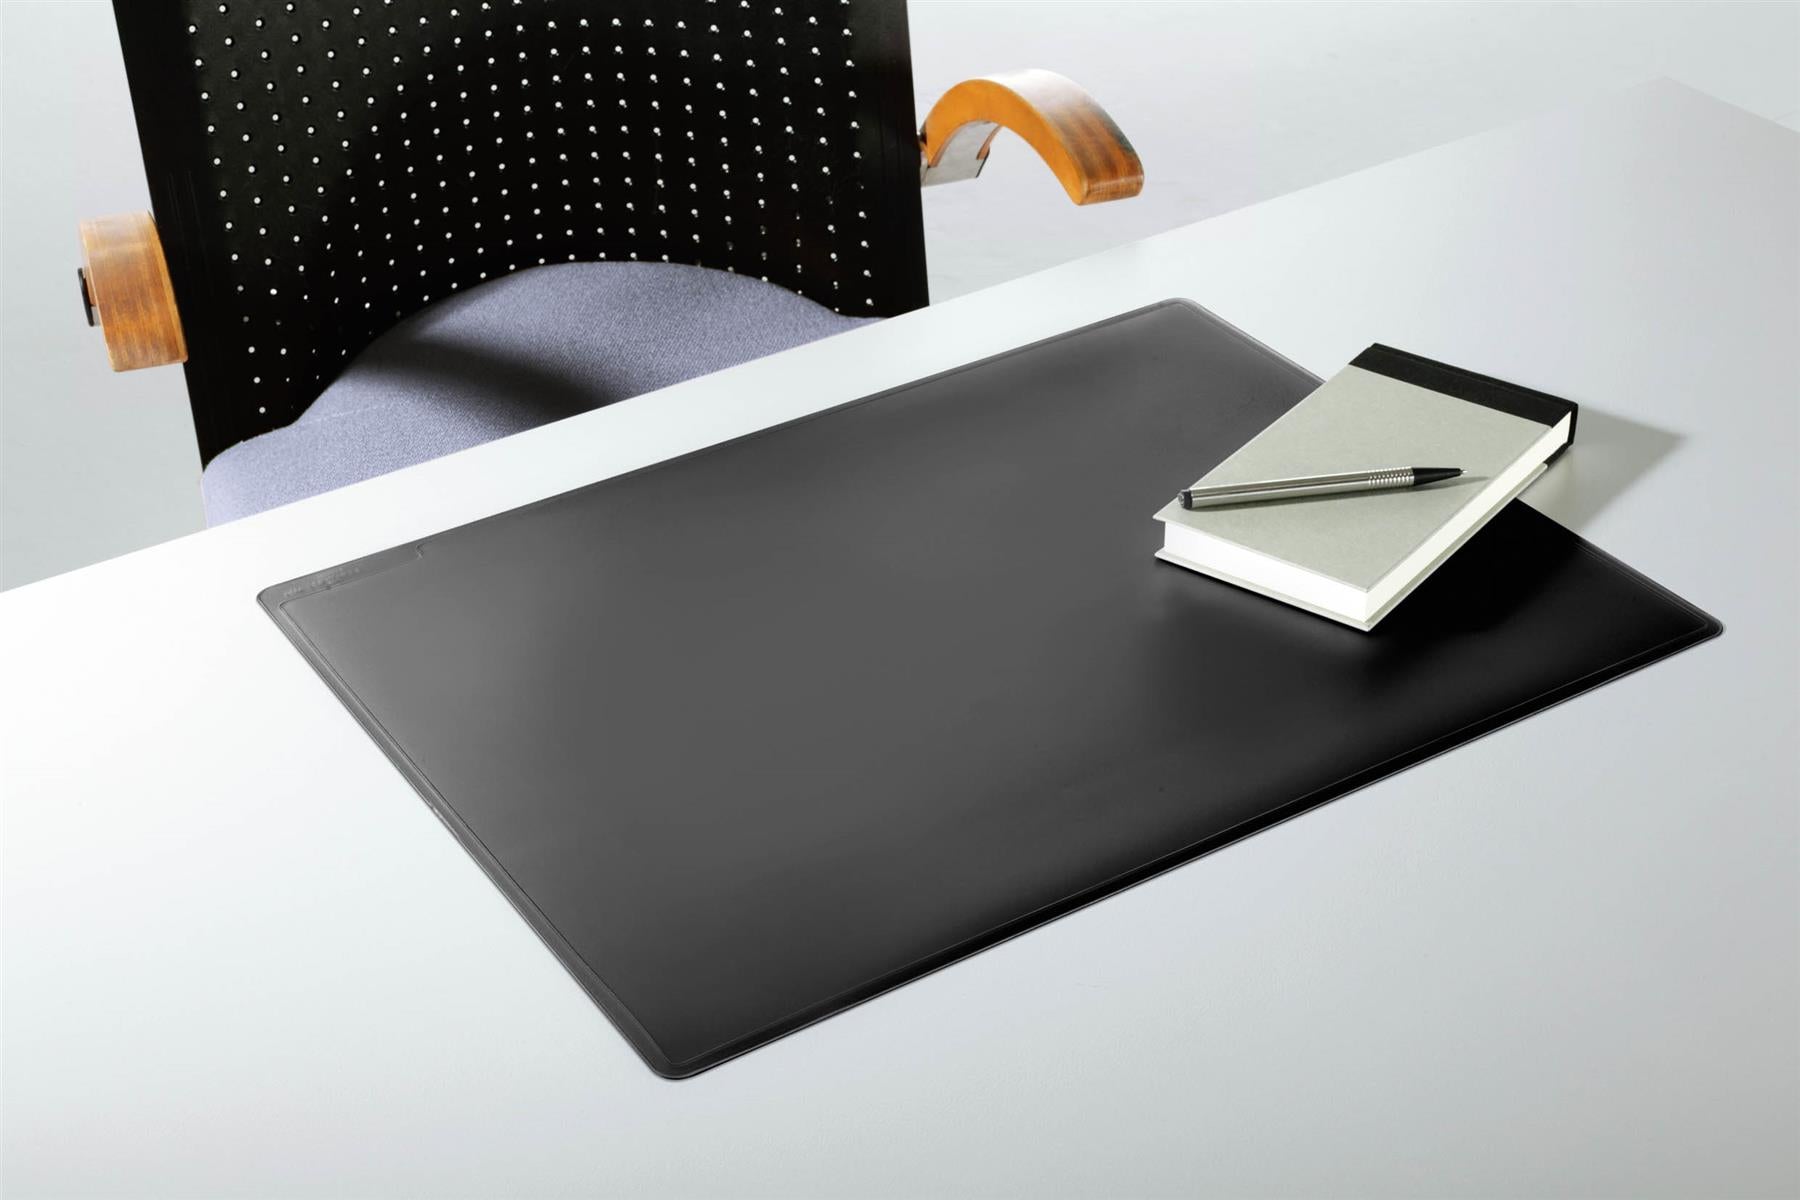 Durable Smooth Non-Slip Desk Mat Laptop PC Keyboard Mouse Pad | 53x40 cm | Black